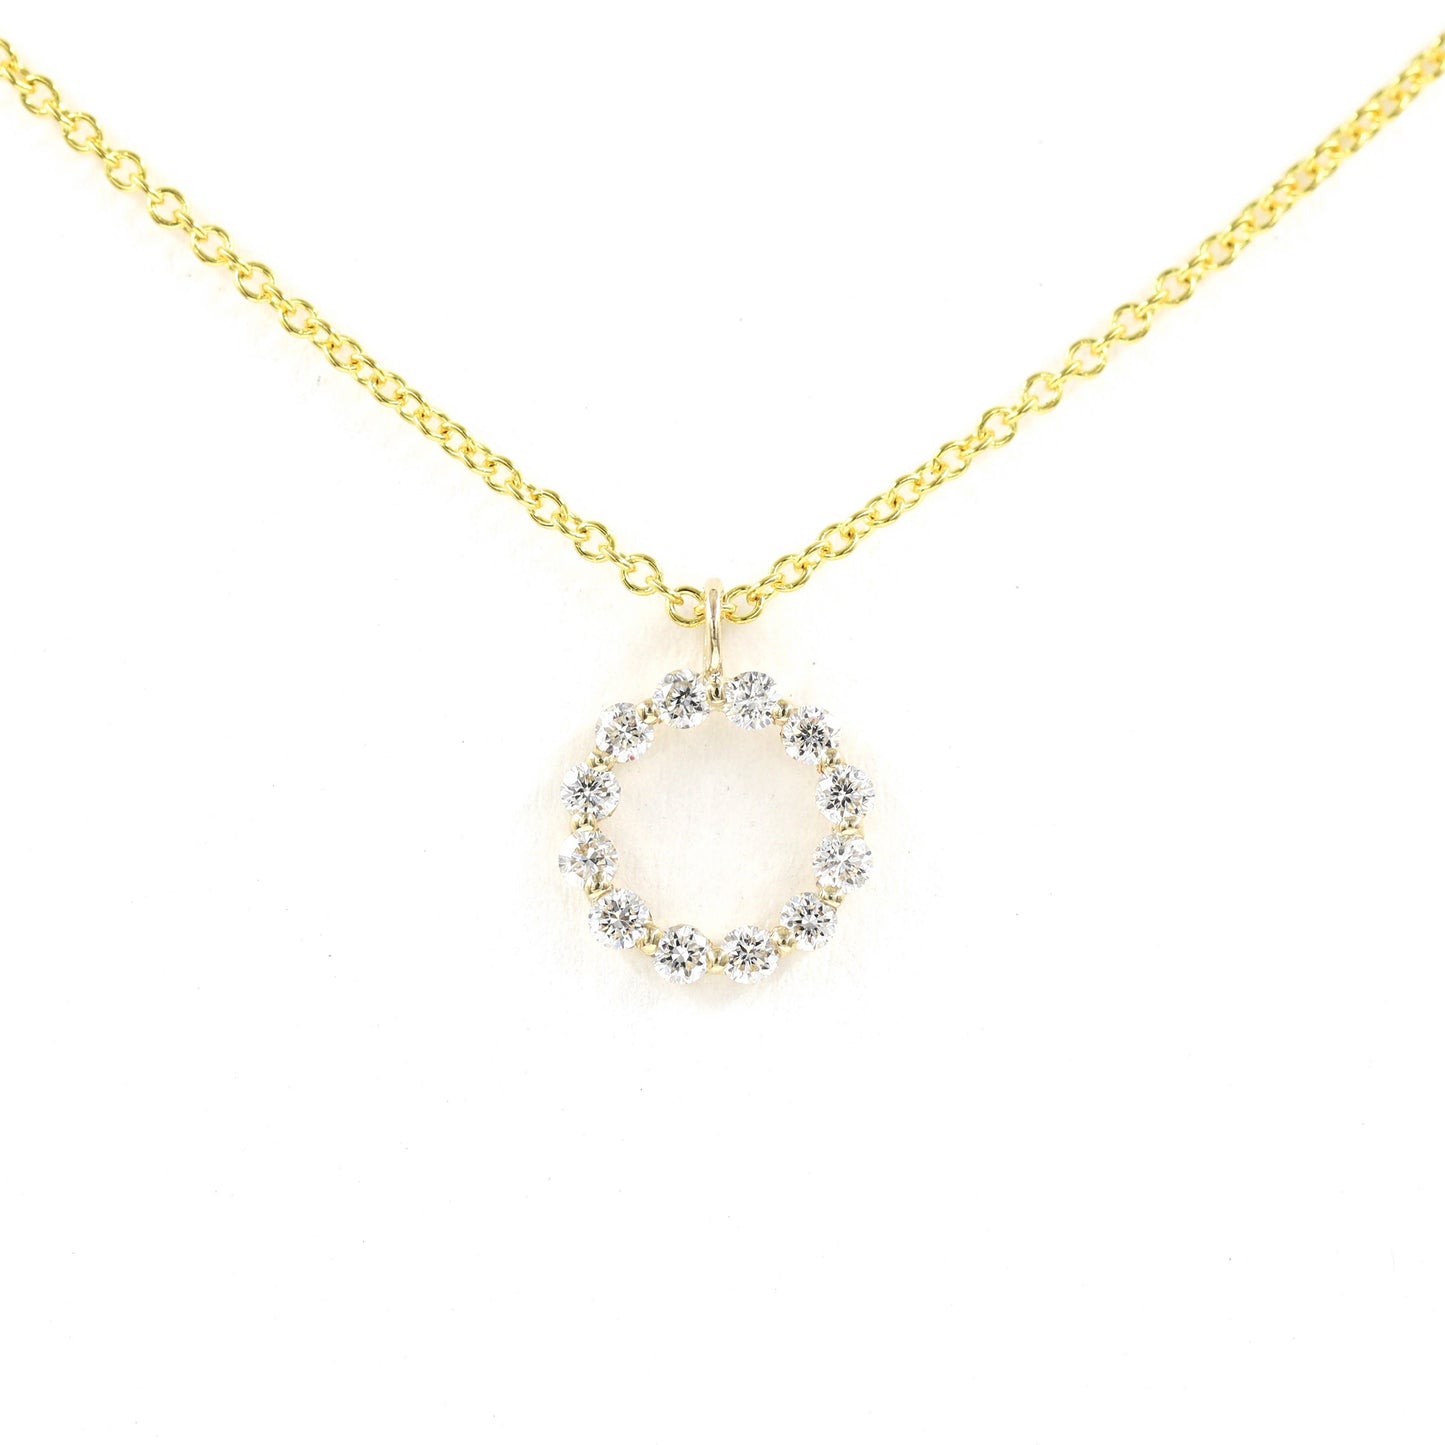 Round Diamond Pendant / 14k Gold Diamond Necklace / Diamond Circle Necklace / Circle Diamond small Charm  / Anniversary Gift for Her